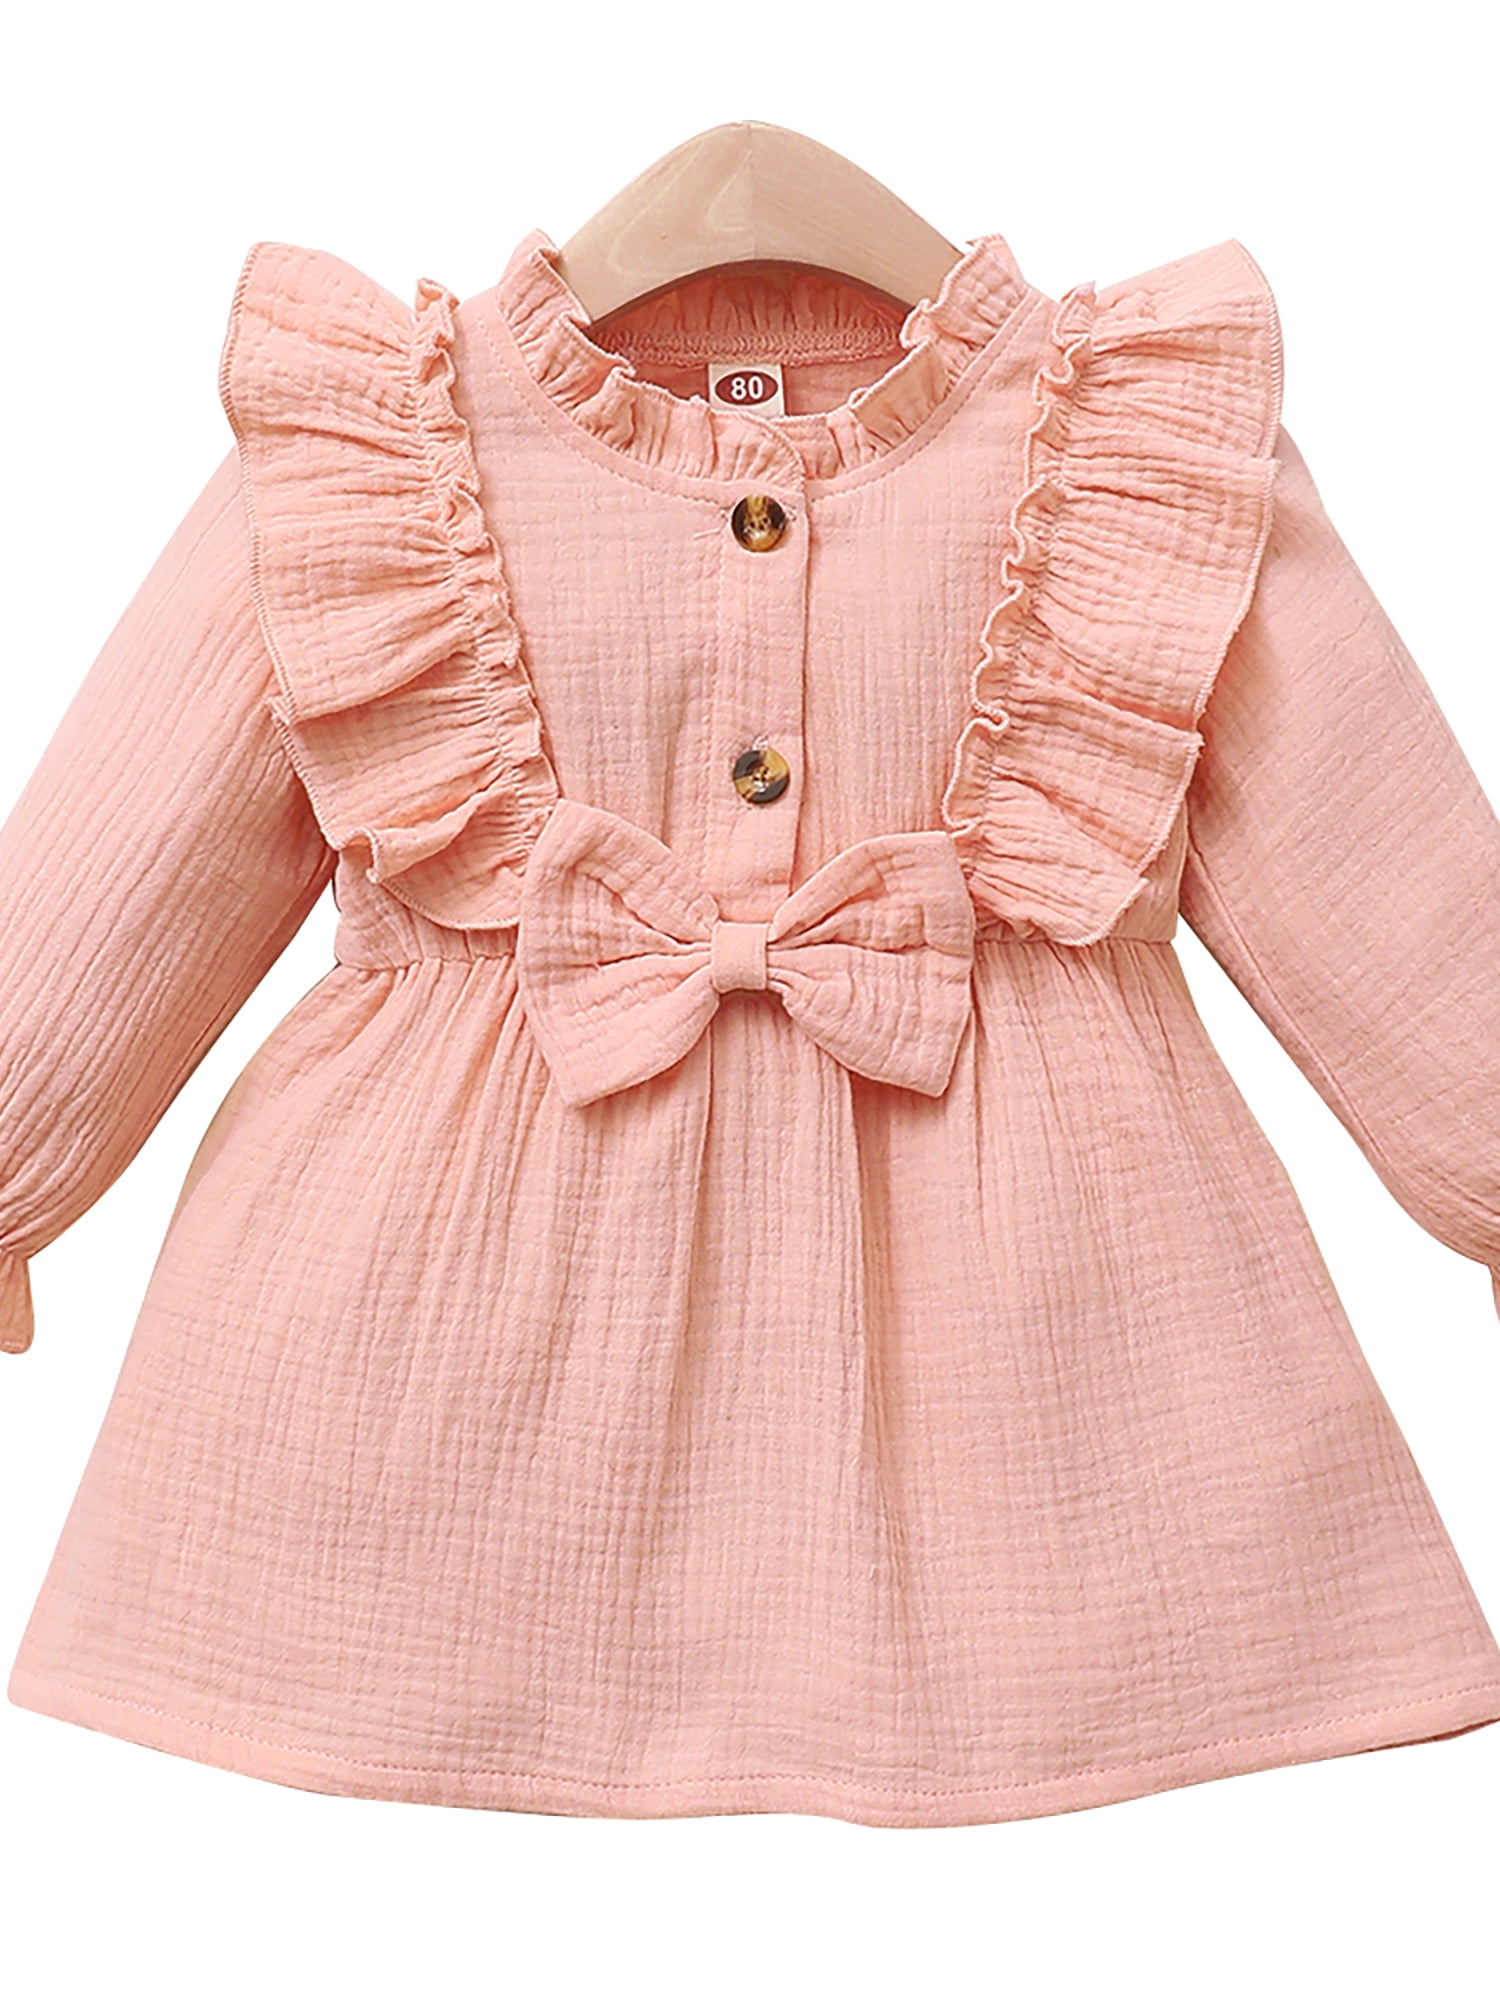 Infant Toddler Baby Girls Dress Pink Ruffle Long Sleeves Cotton 